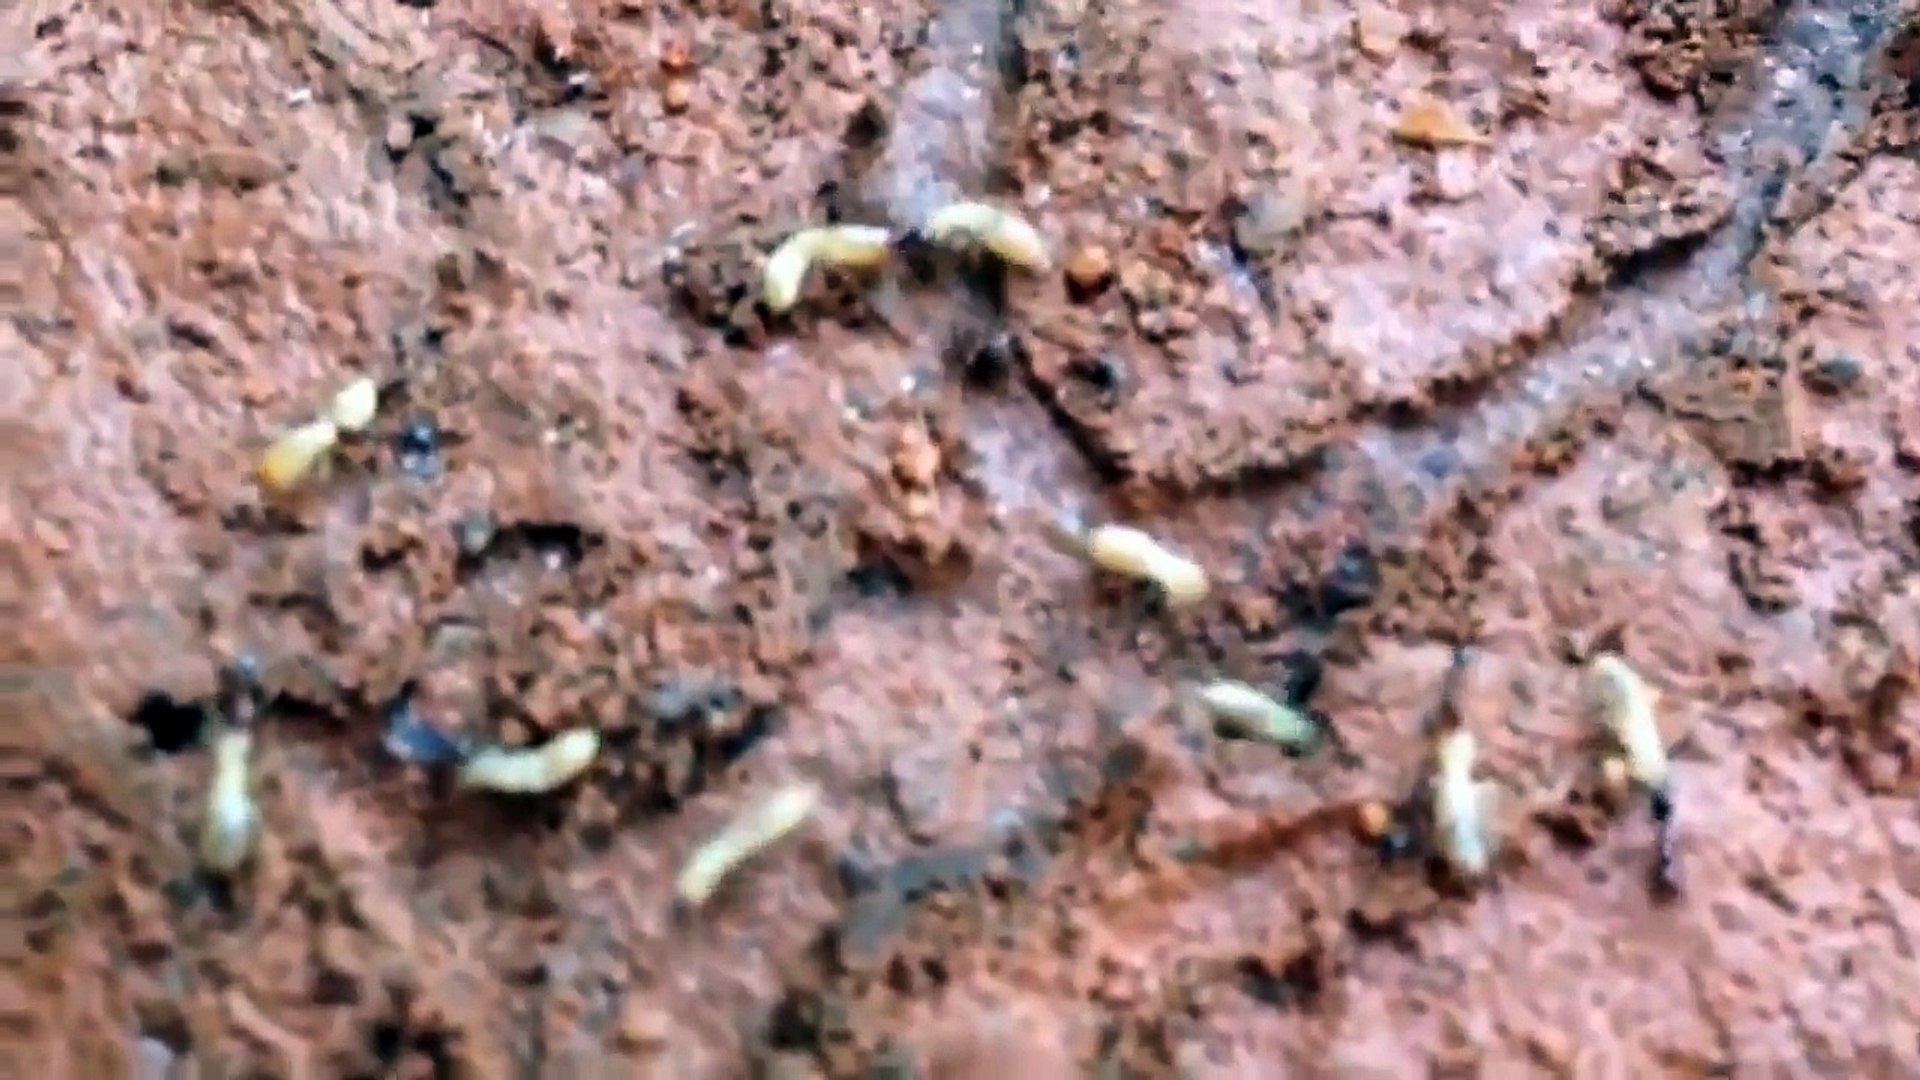 Ants vs Termites - Ants hunting a lot of termites